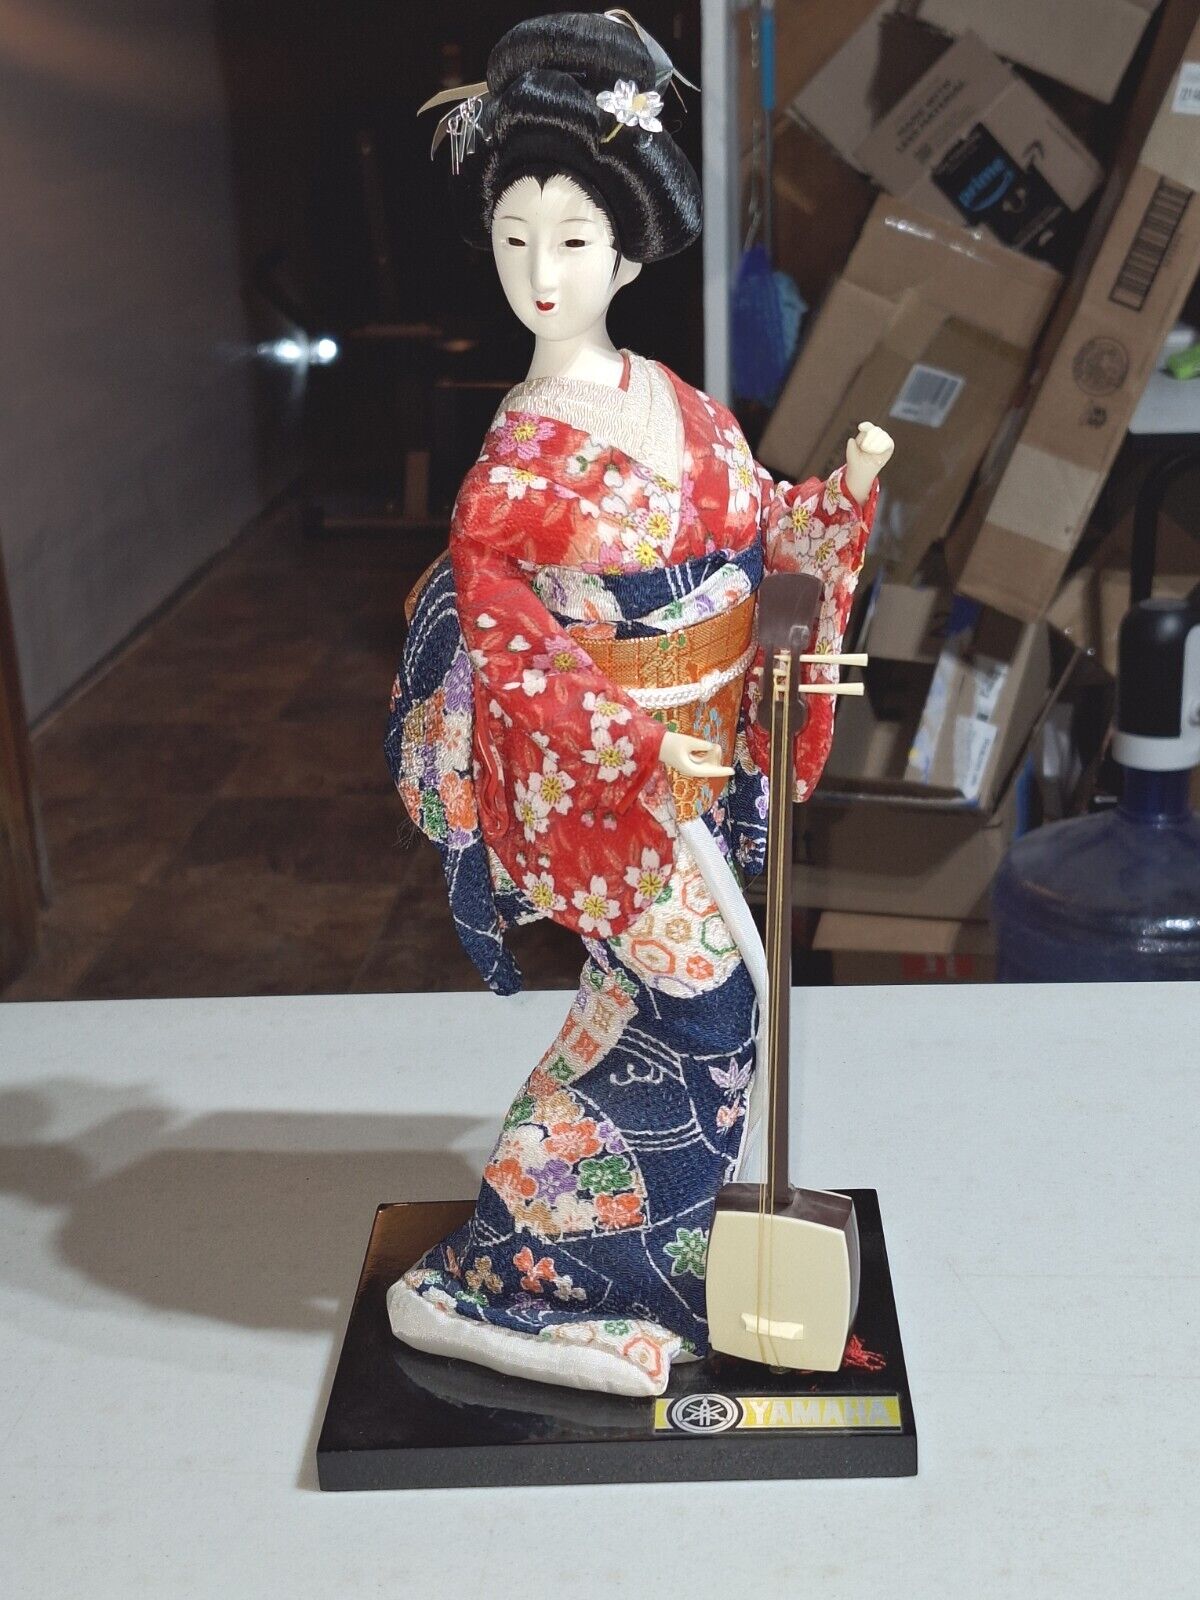 14 in Yamaha Kyugetsu Doll Vintage Japanese Made In Tokyo Japan Collectible